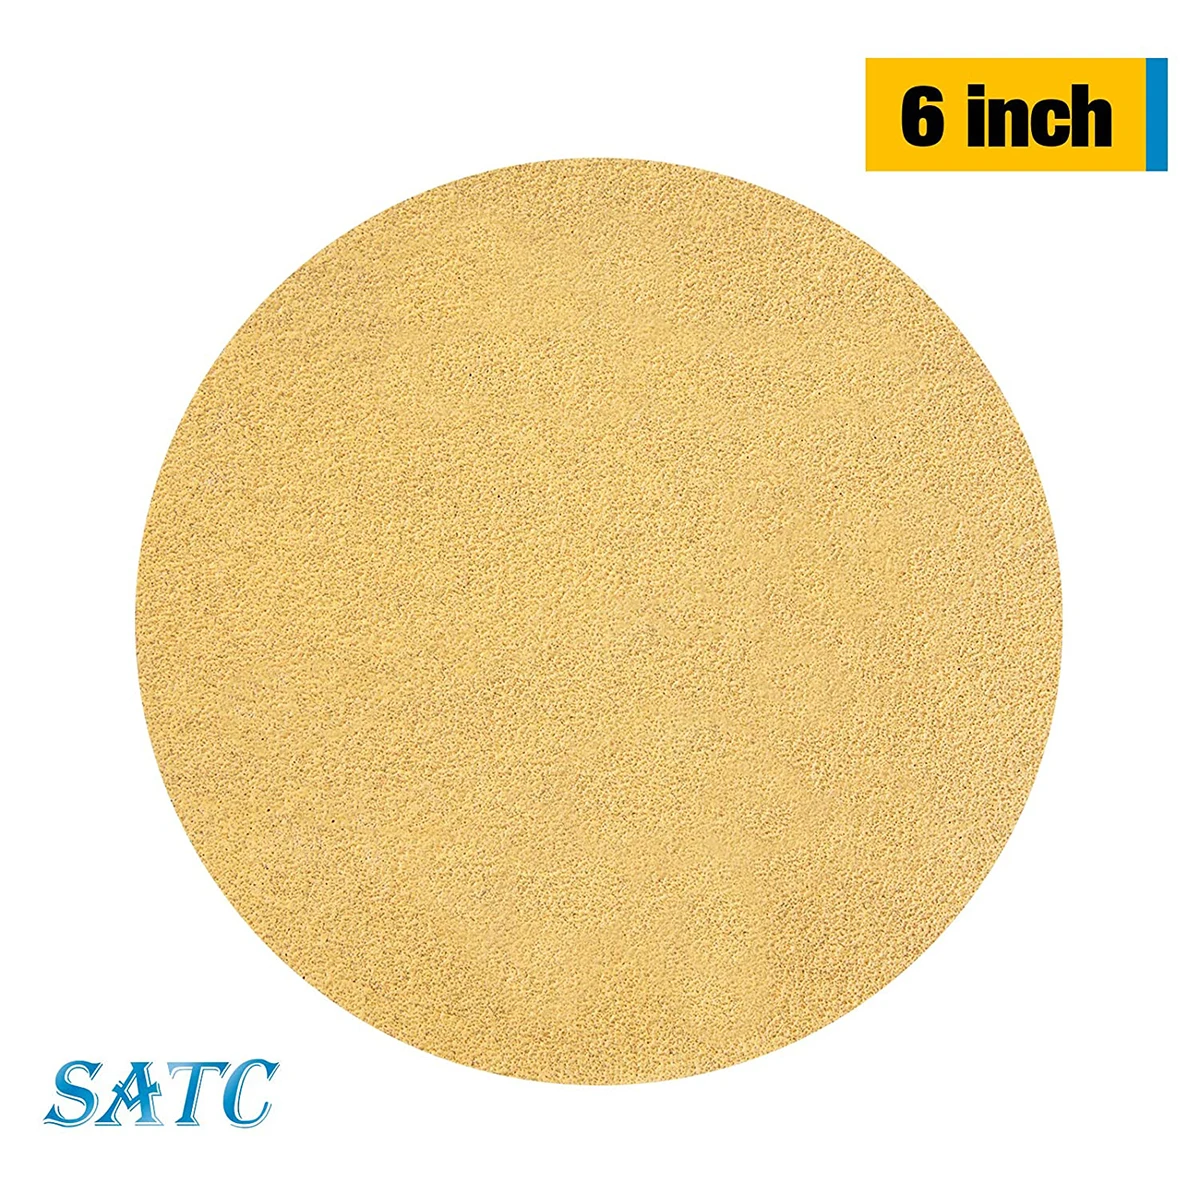 6Inch PSA Gold Sanding Discs Roll 220# Adhesive Backed Sandpaper Roll for Sander